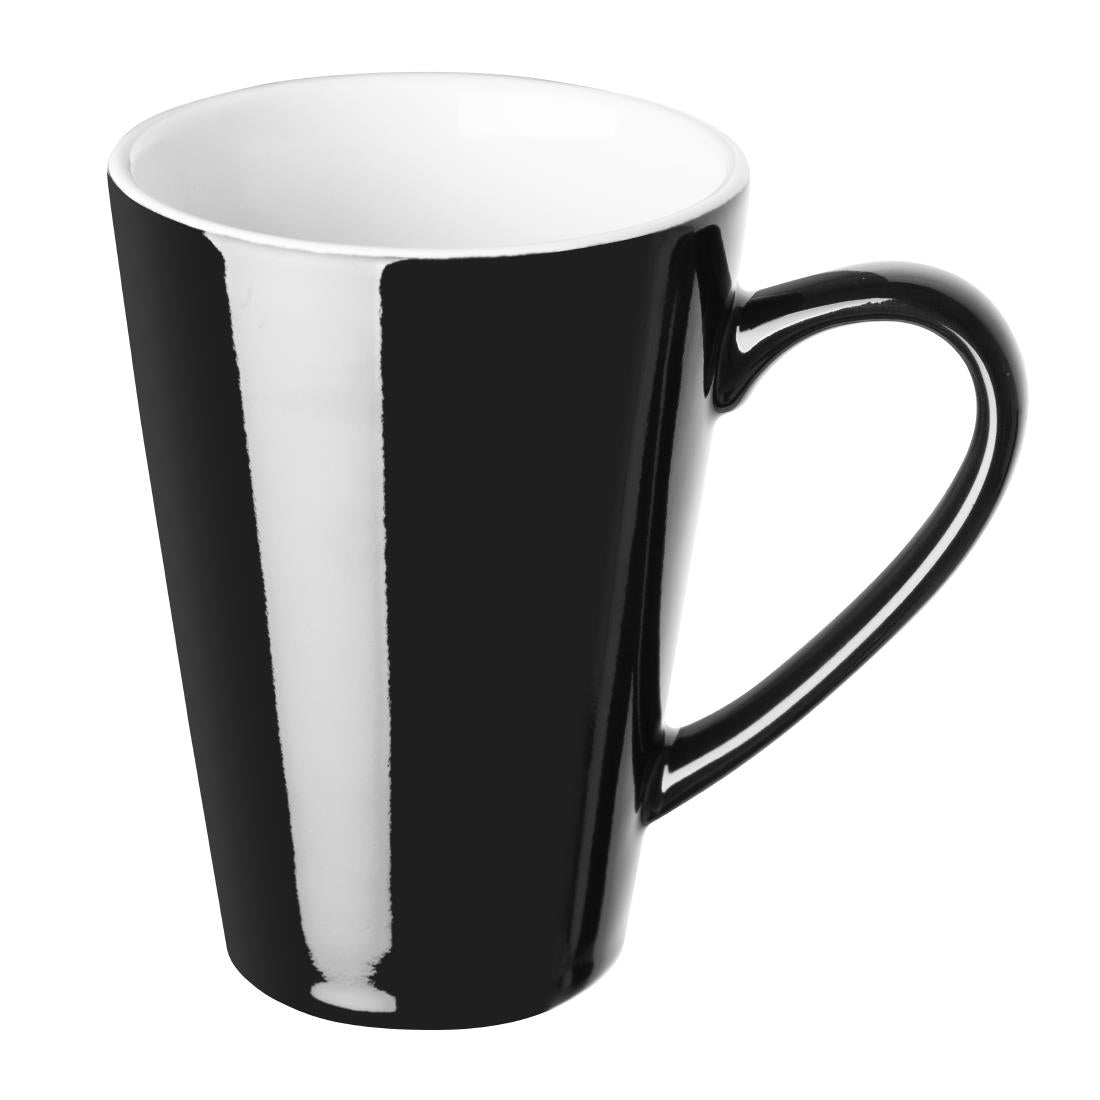 CU957 Olympia Cafe Latte Cup Black - 340ml 11.5fl oz (Pack of 12)